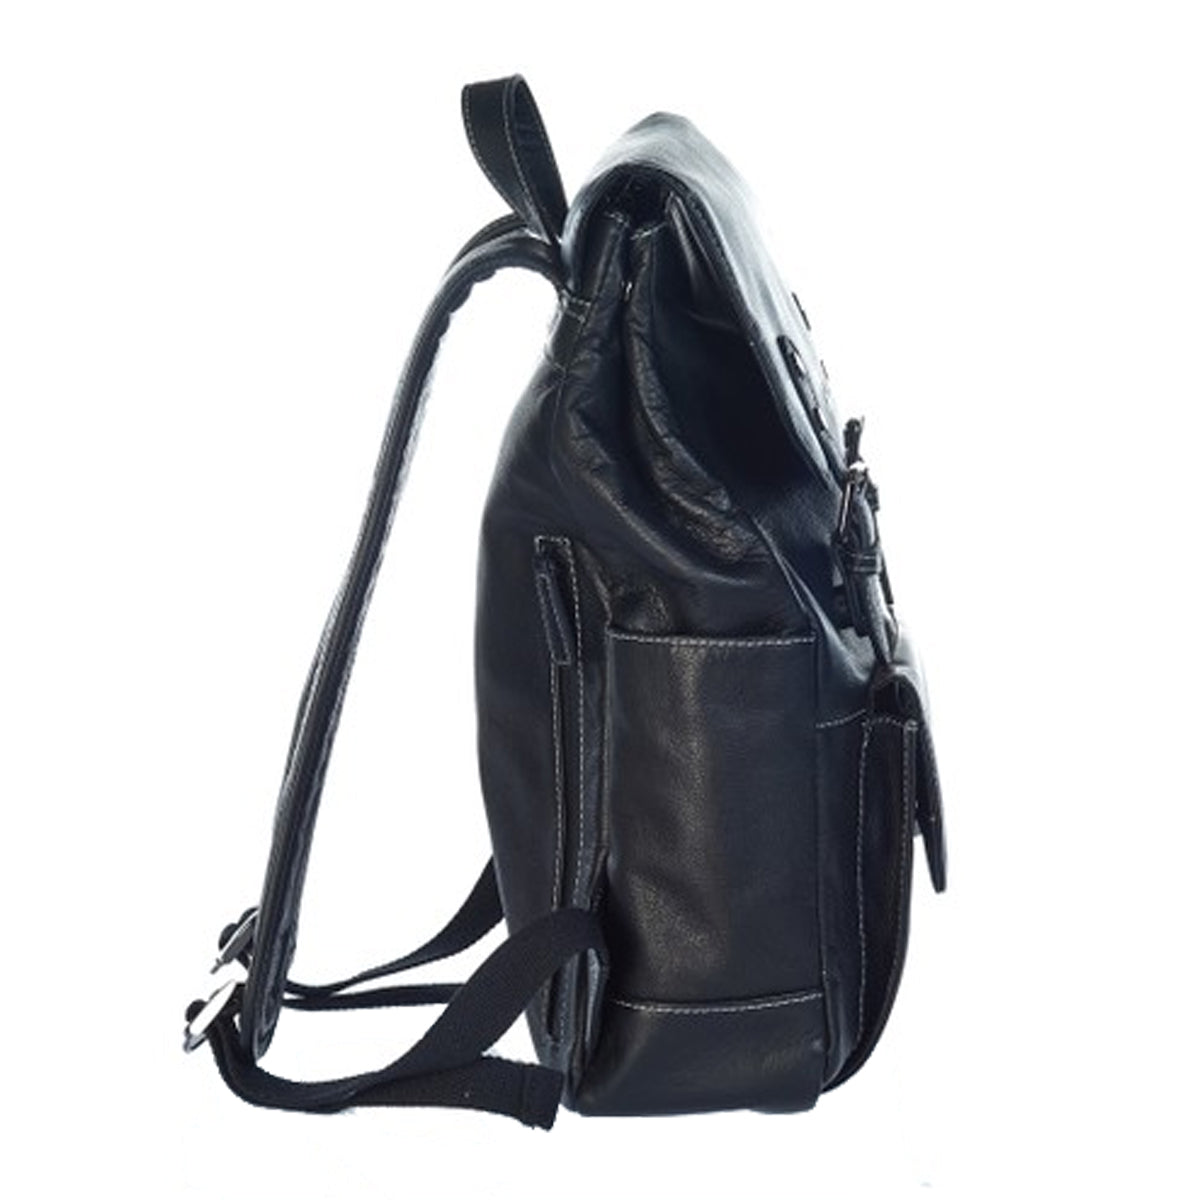 EnzoDesign Urban Light Pebble Grained Leather Backpack